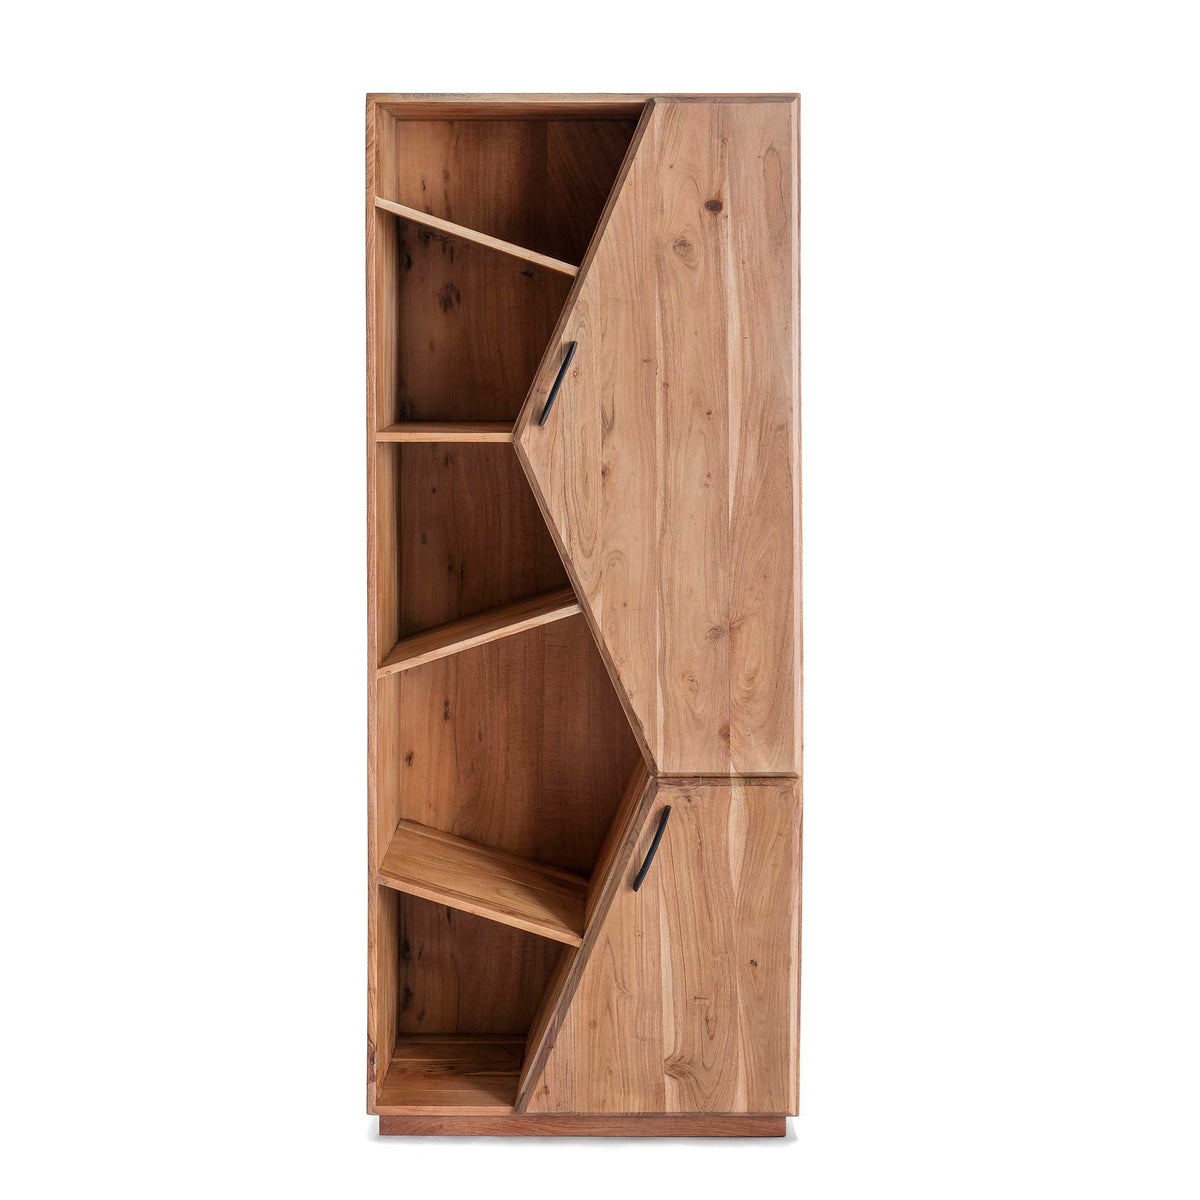 Yavin Acacia Bookcase from Roseland Furniture